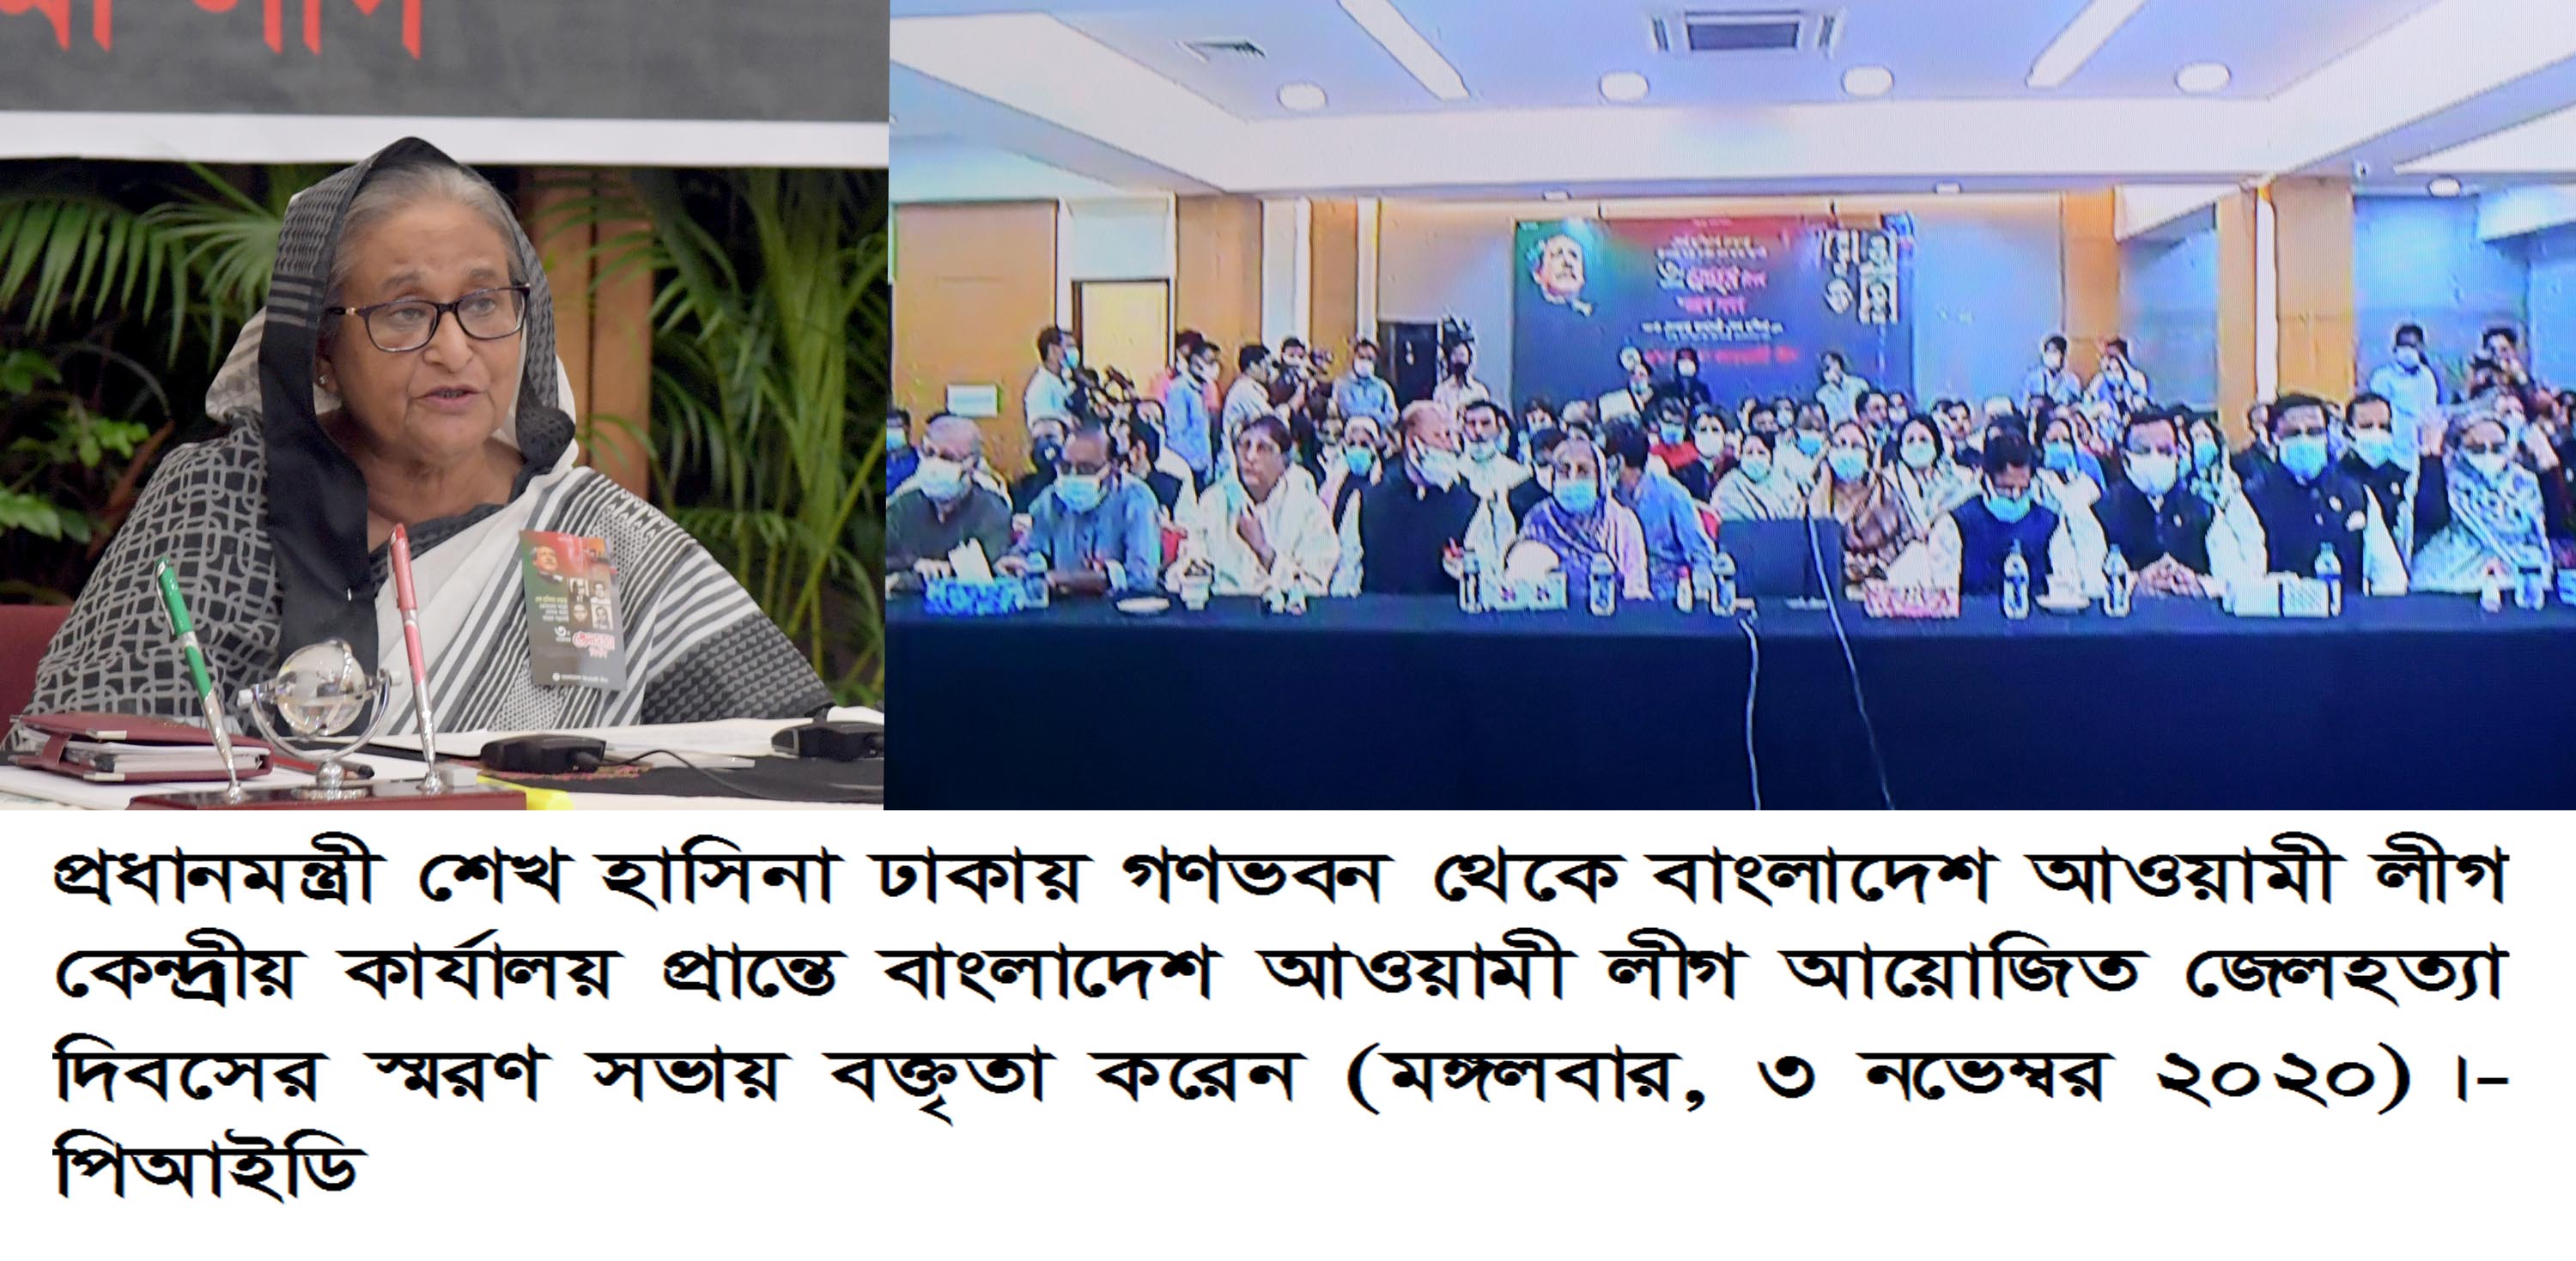 Sheikh Hasina attends event